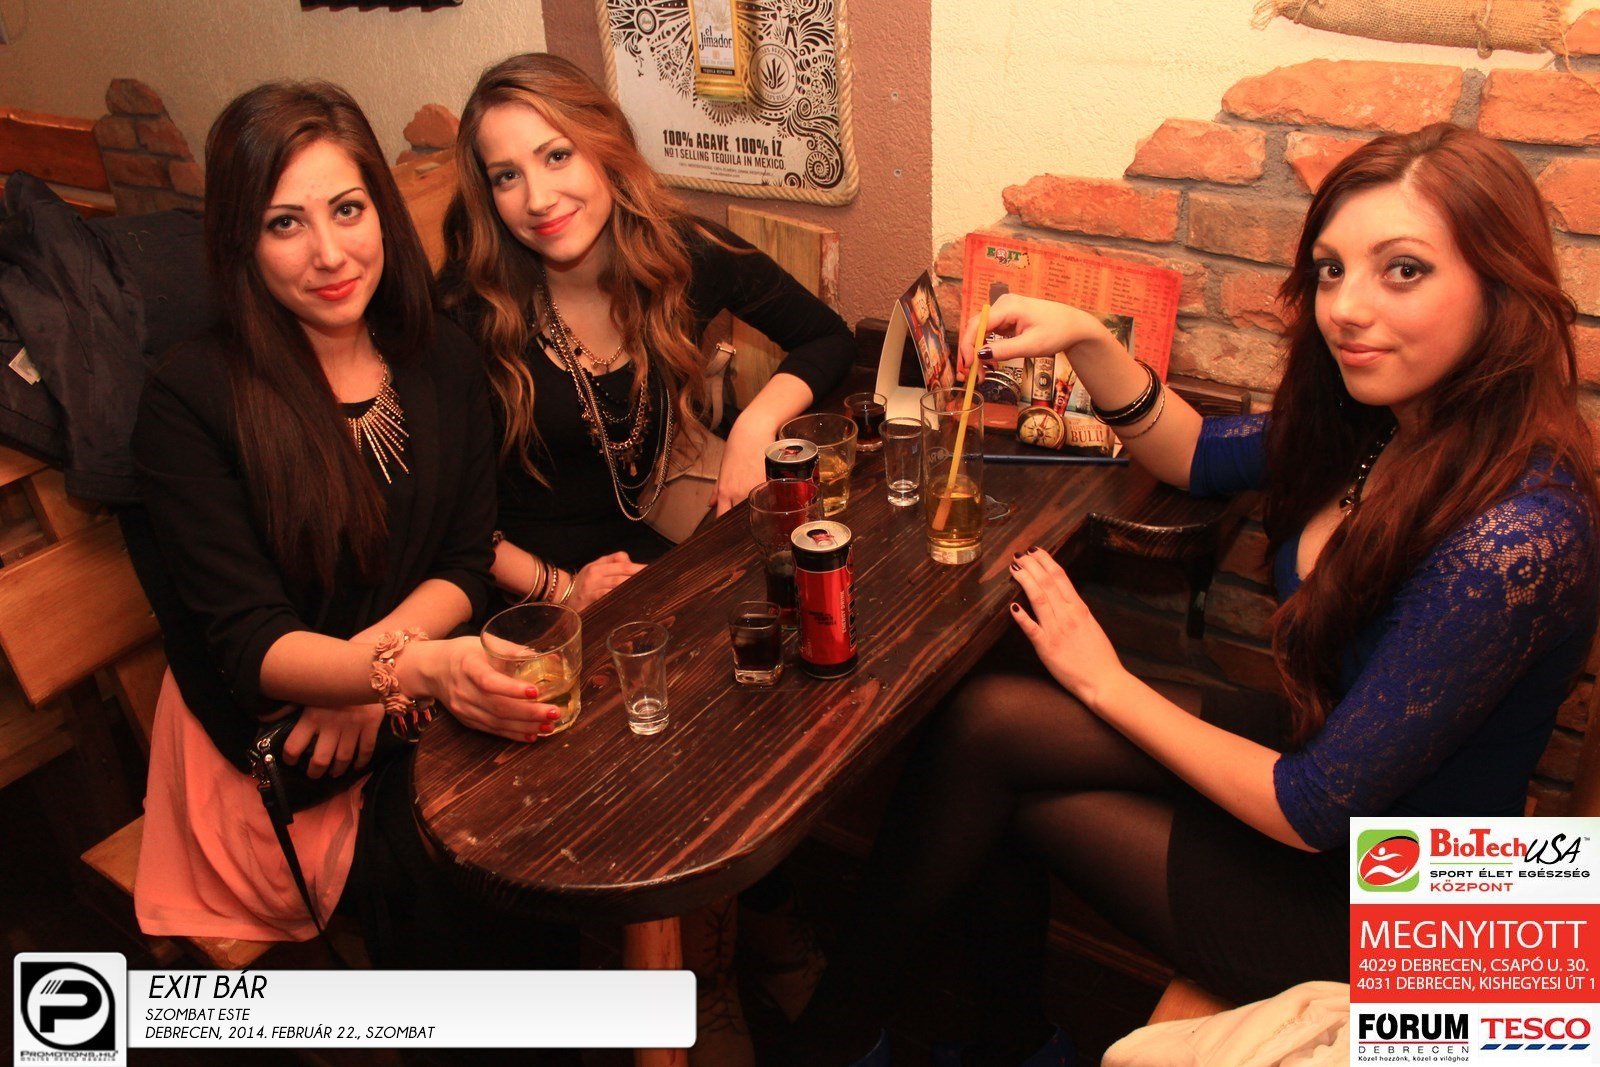 Debrecen,Exit Bar - 2014. Február 22., szombat este